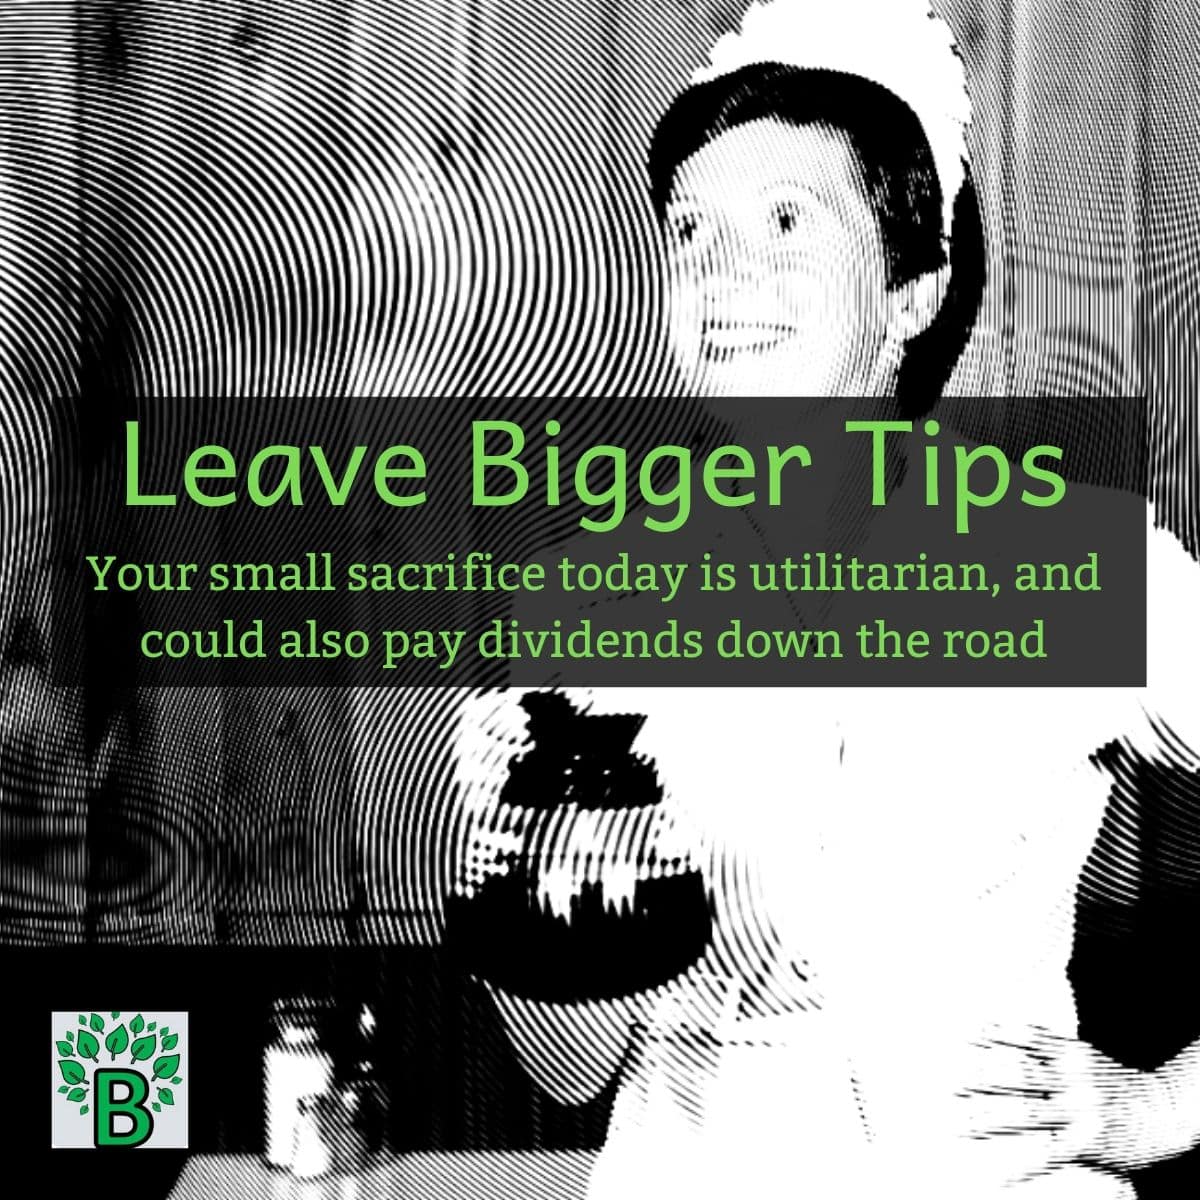 Leave bigger tips